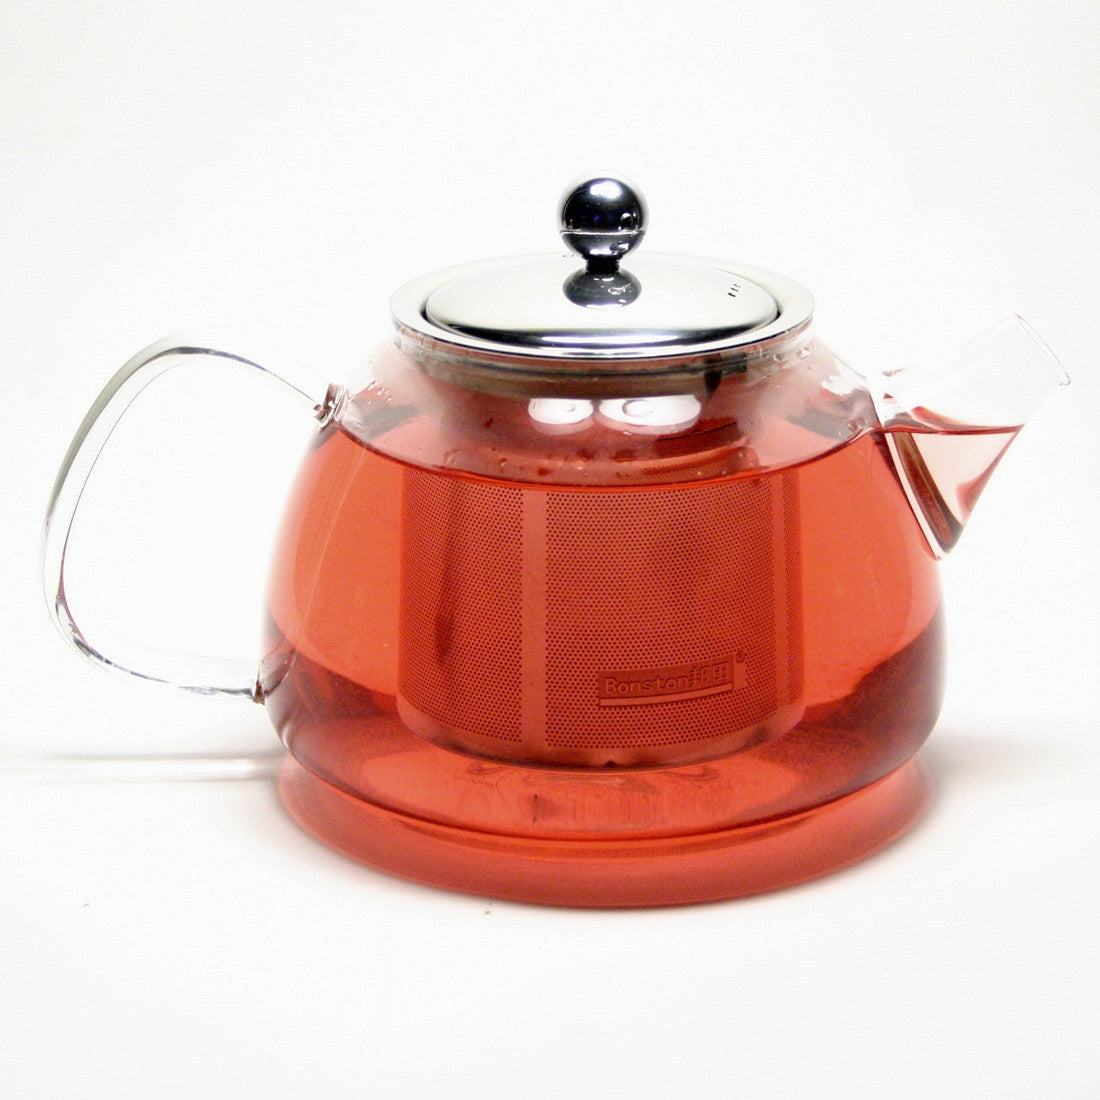 Useful Teapot Warmer Multi-purpose Stainless Steel Heat-resistant